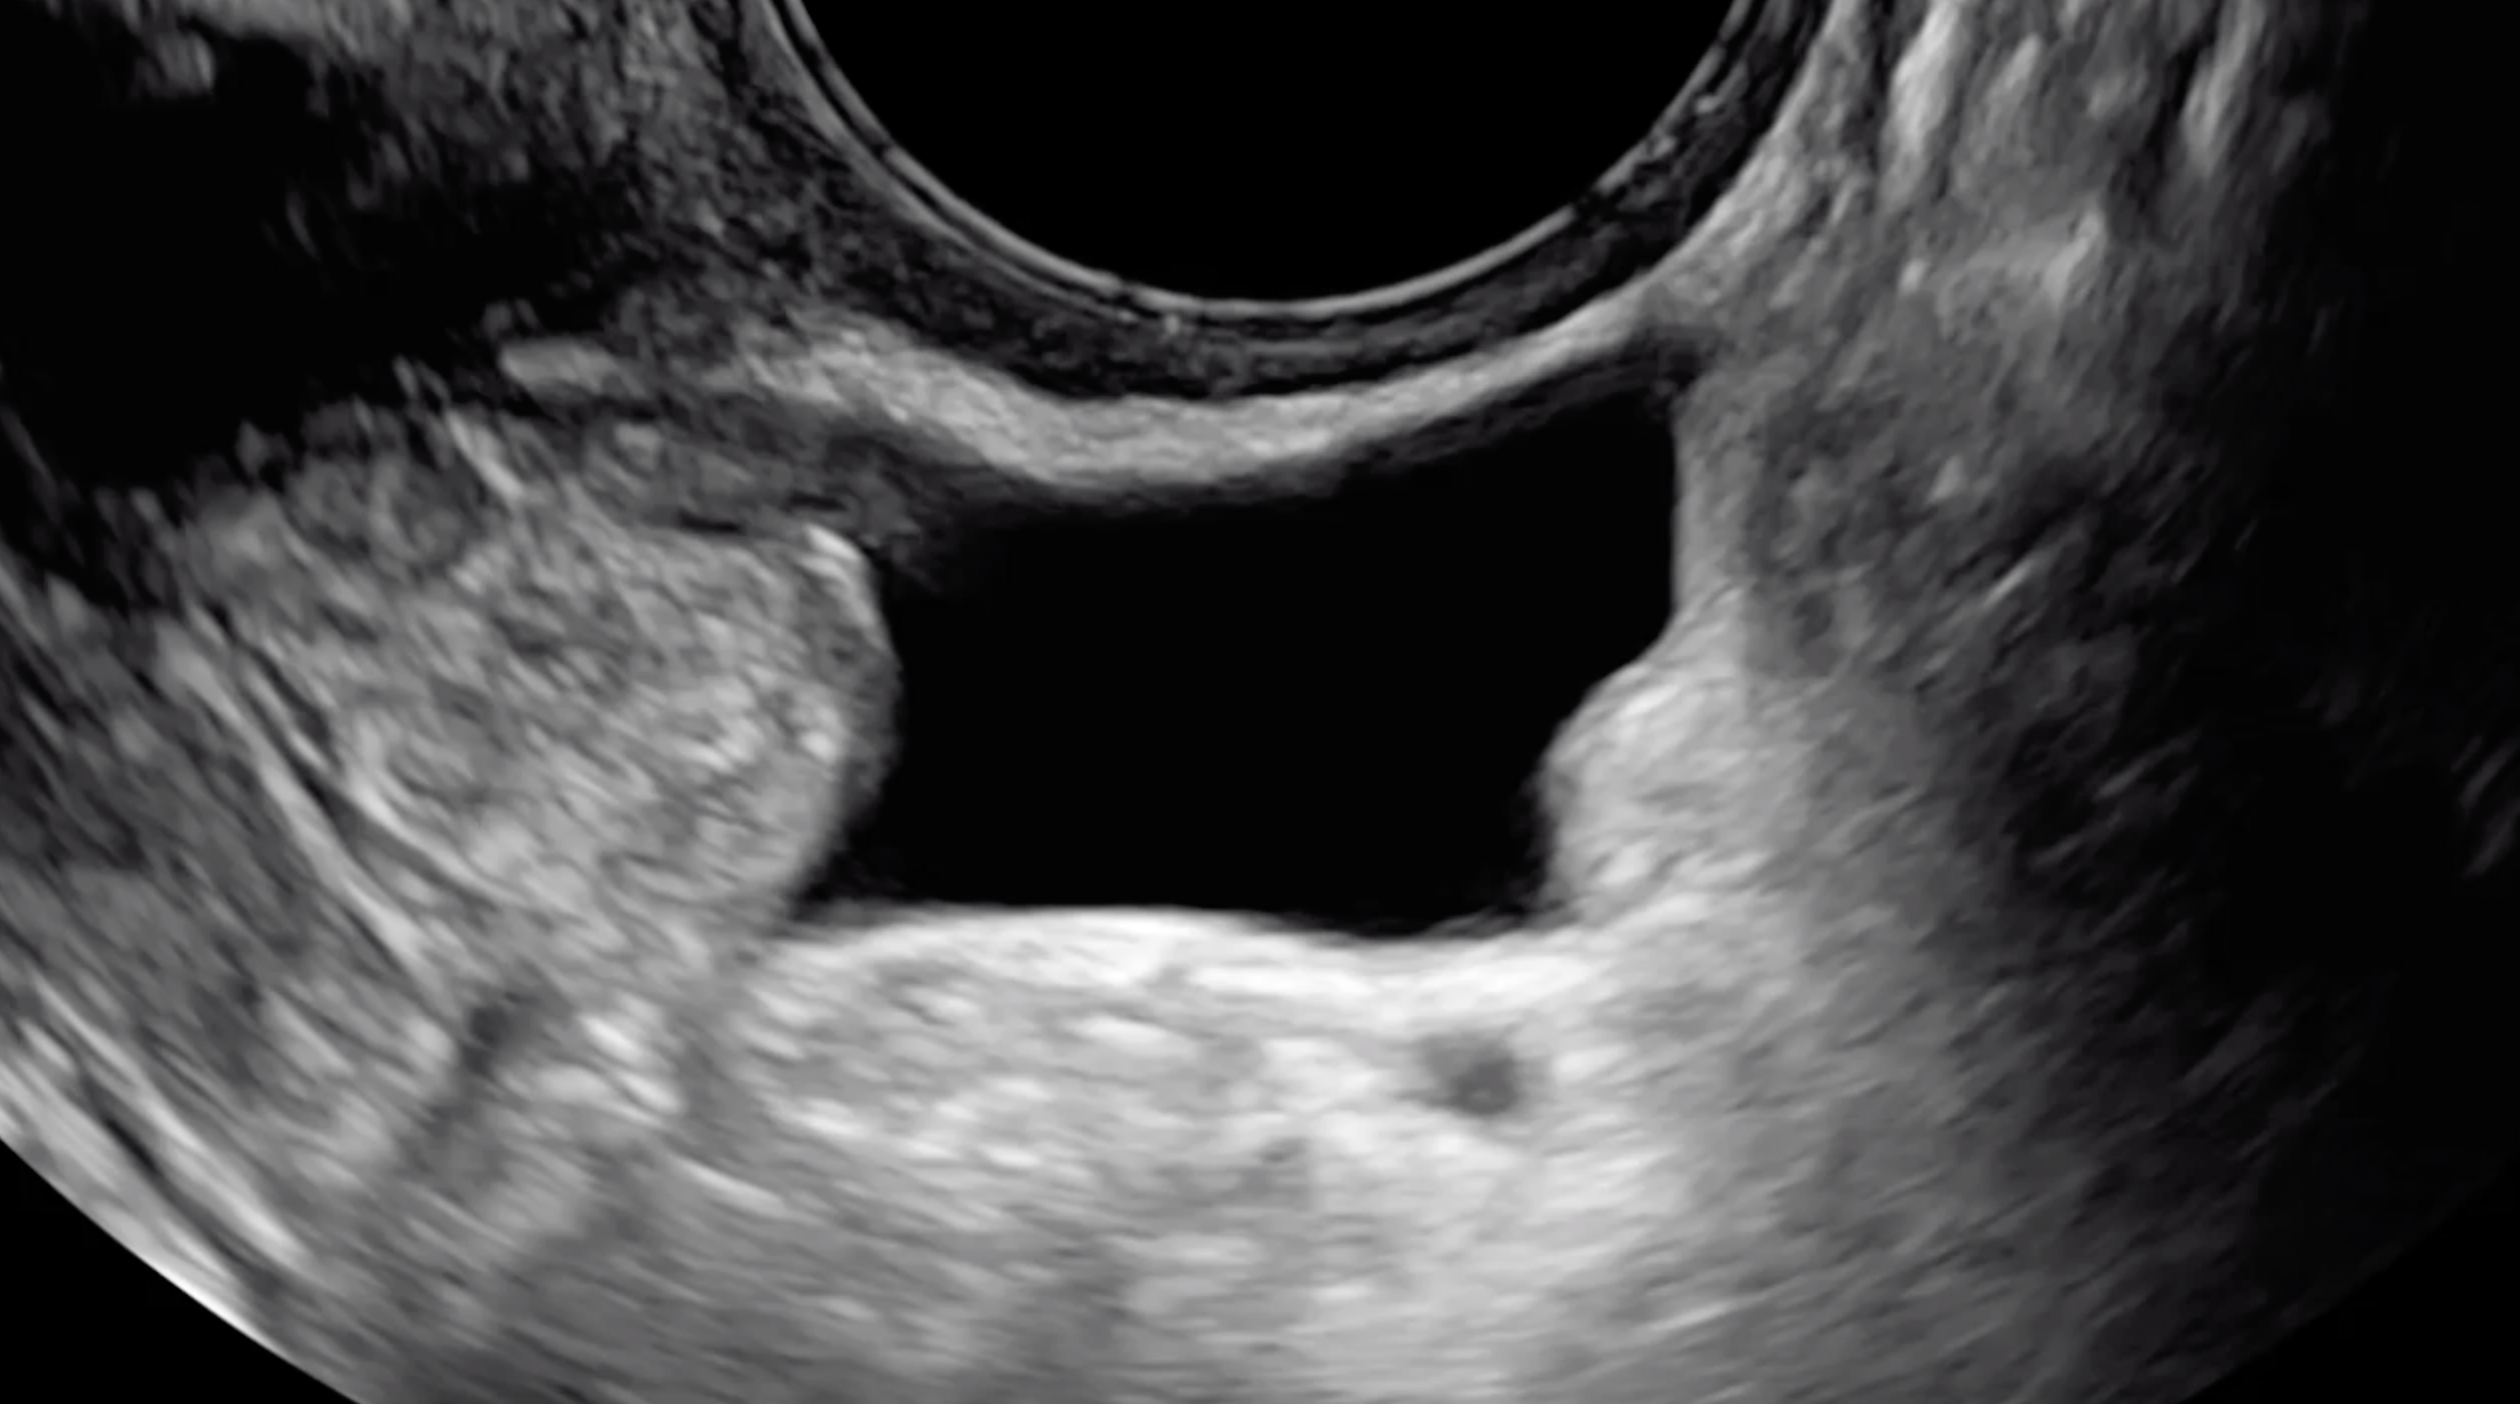 Normal uterosacral ligament and rectouterine pouch peritoneum